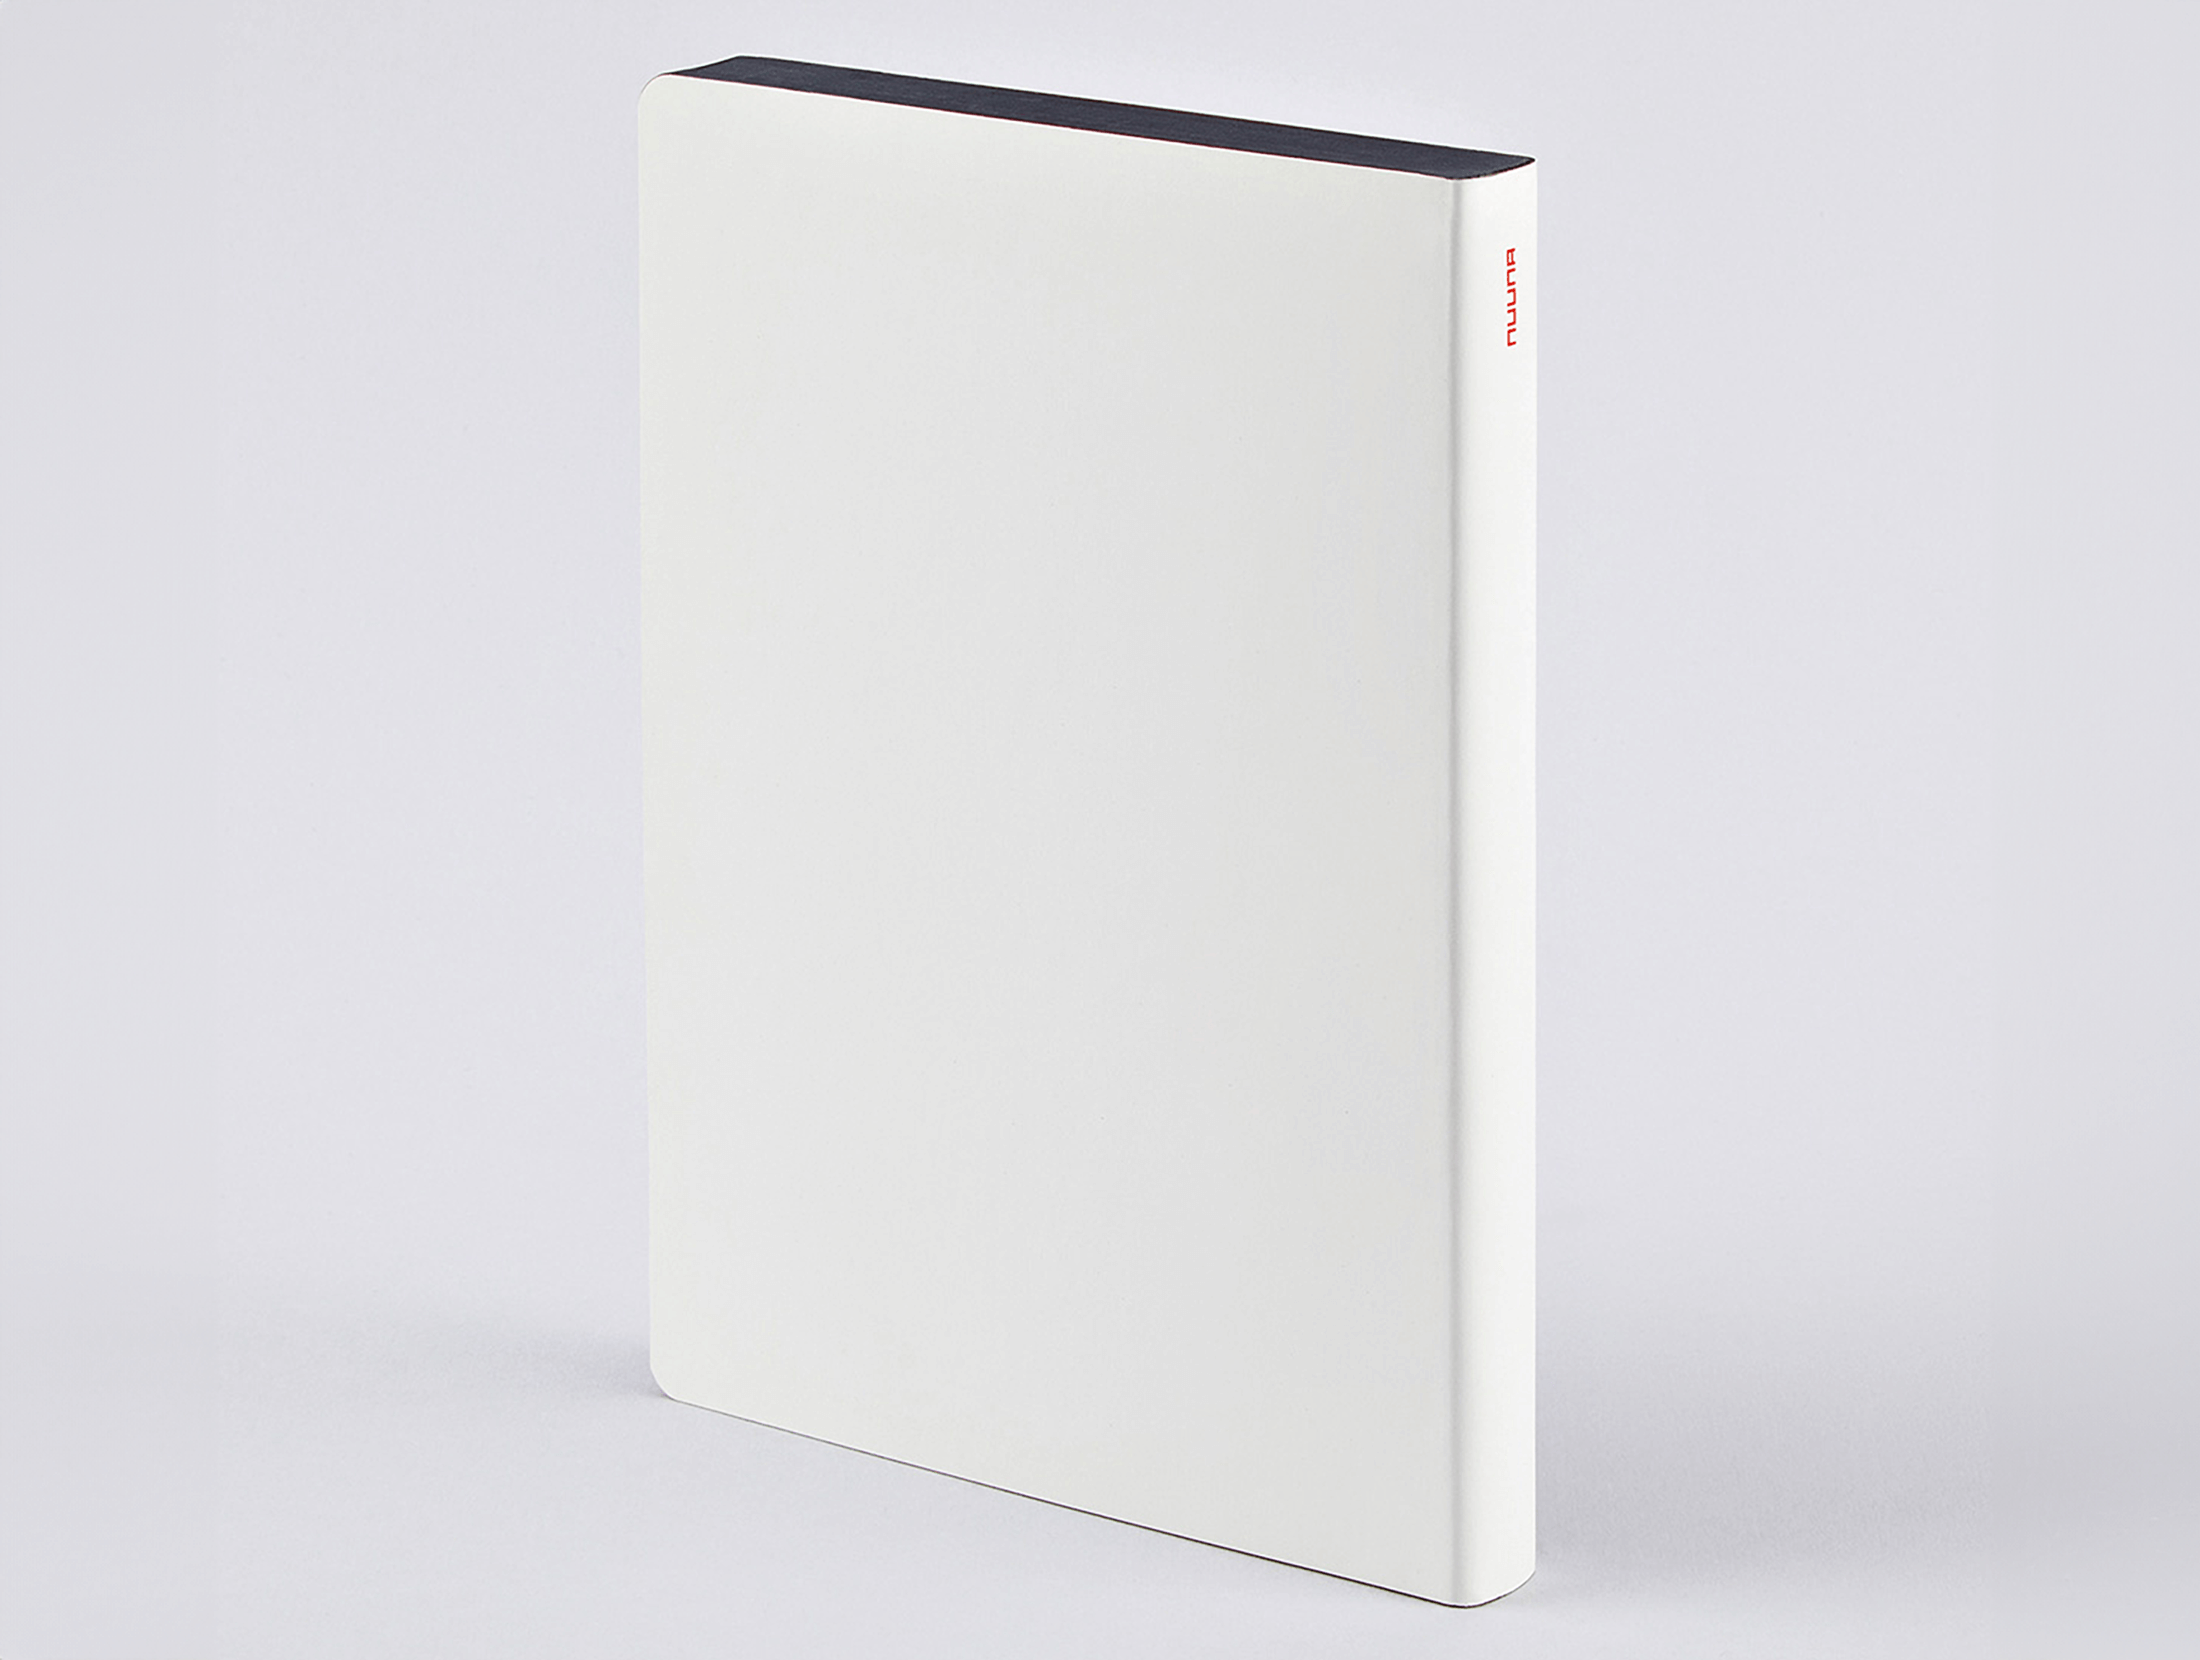 Not White L Light - Blue, Notebook, order online